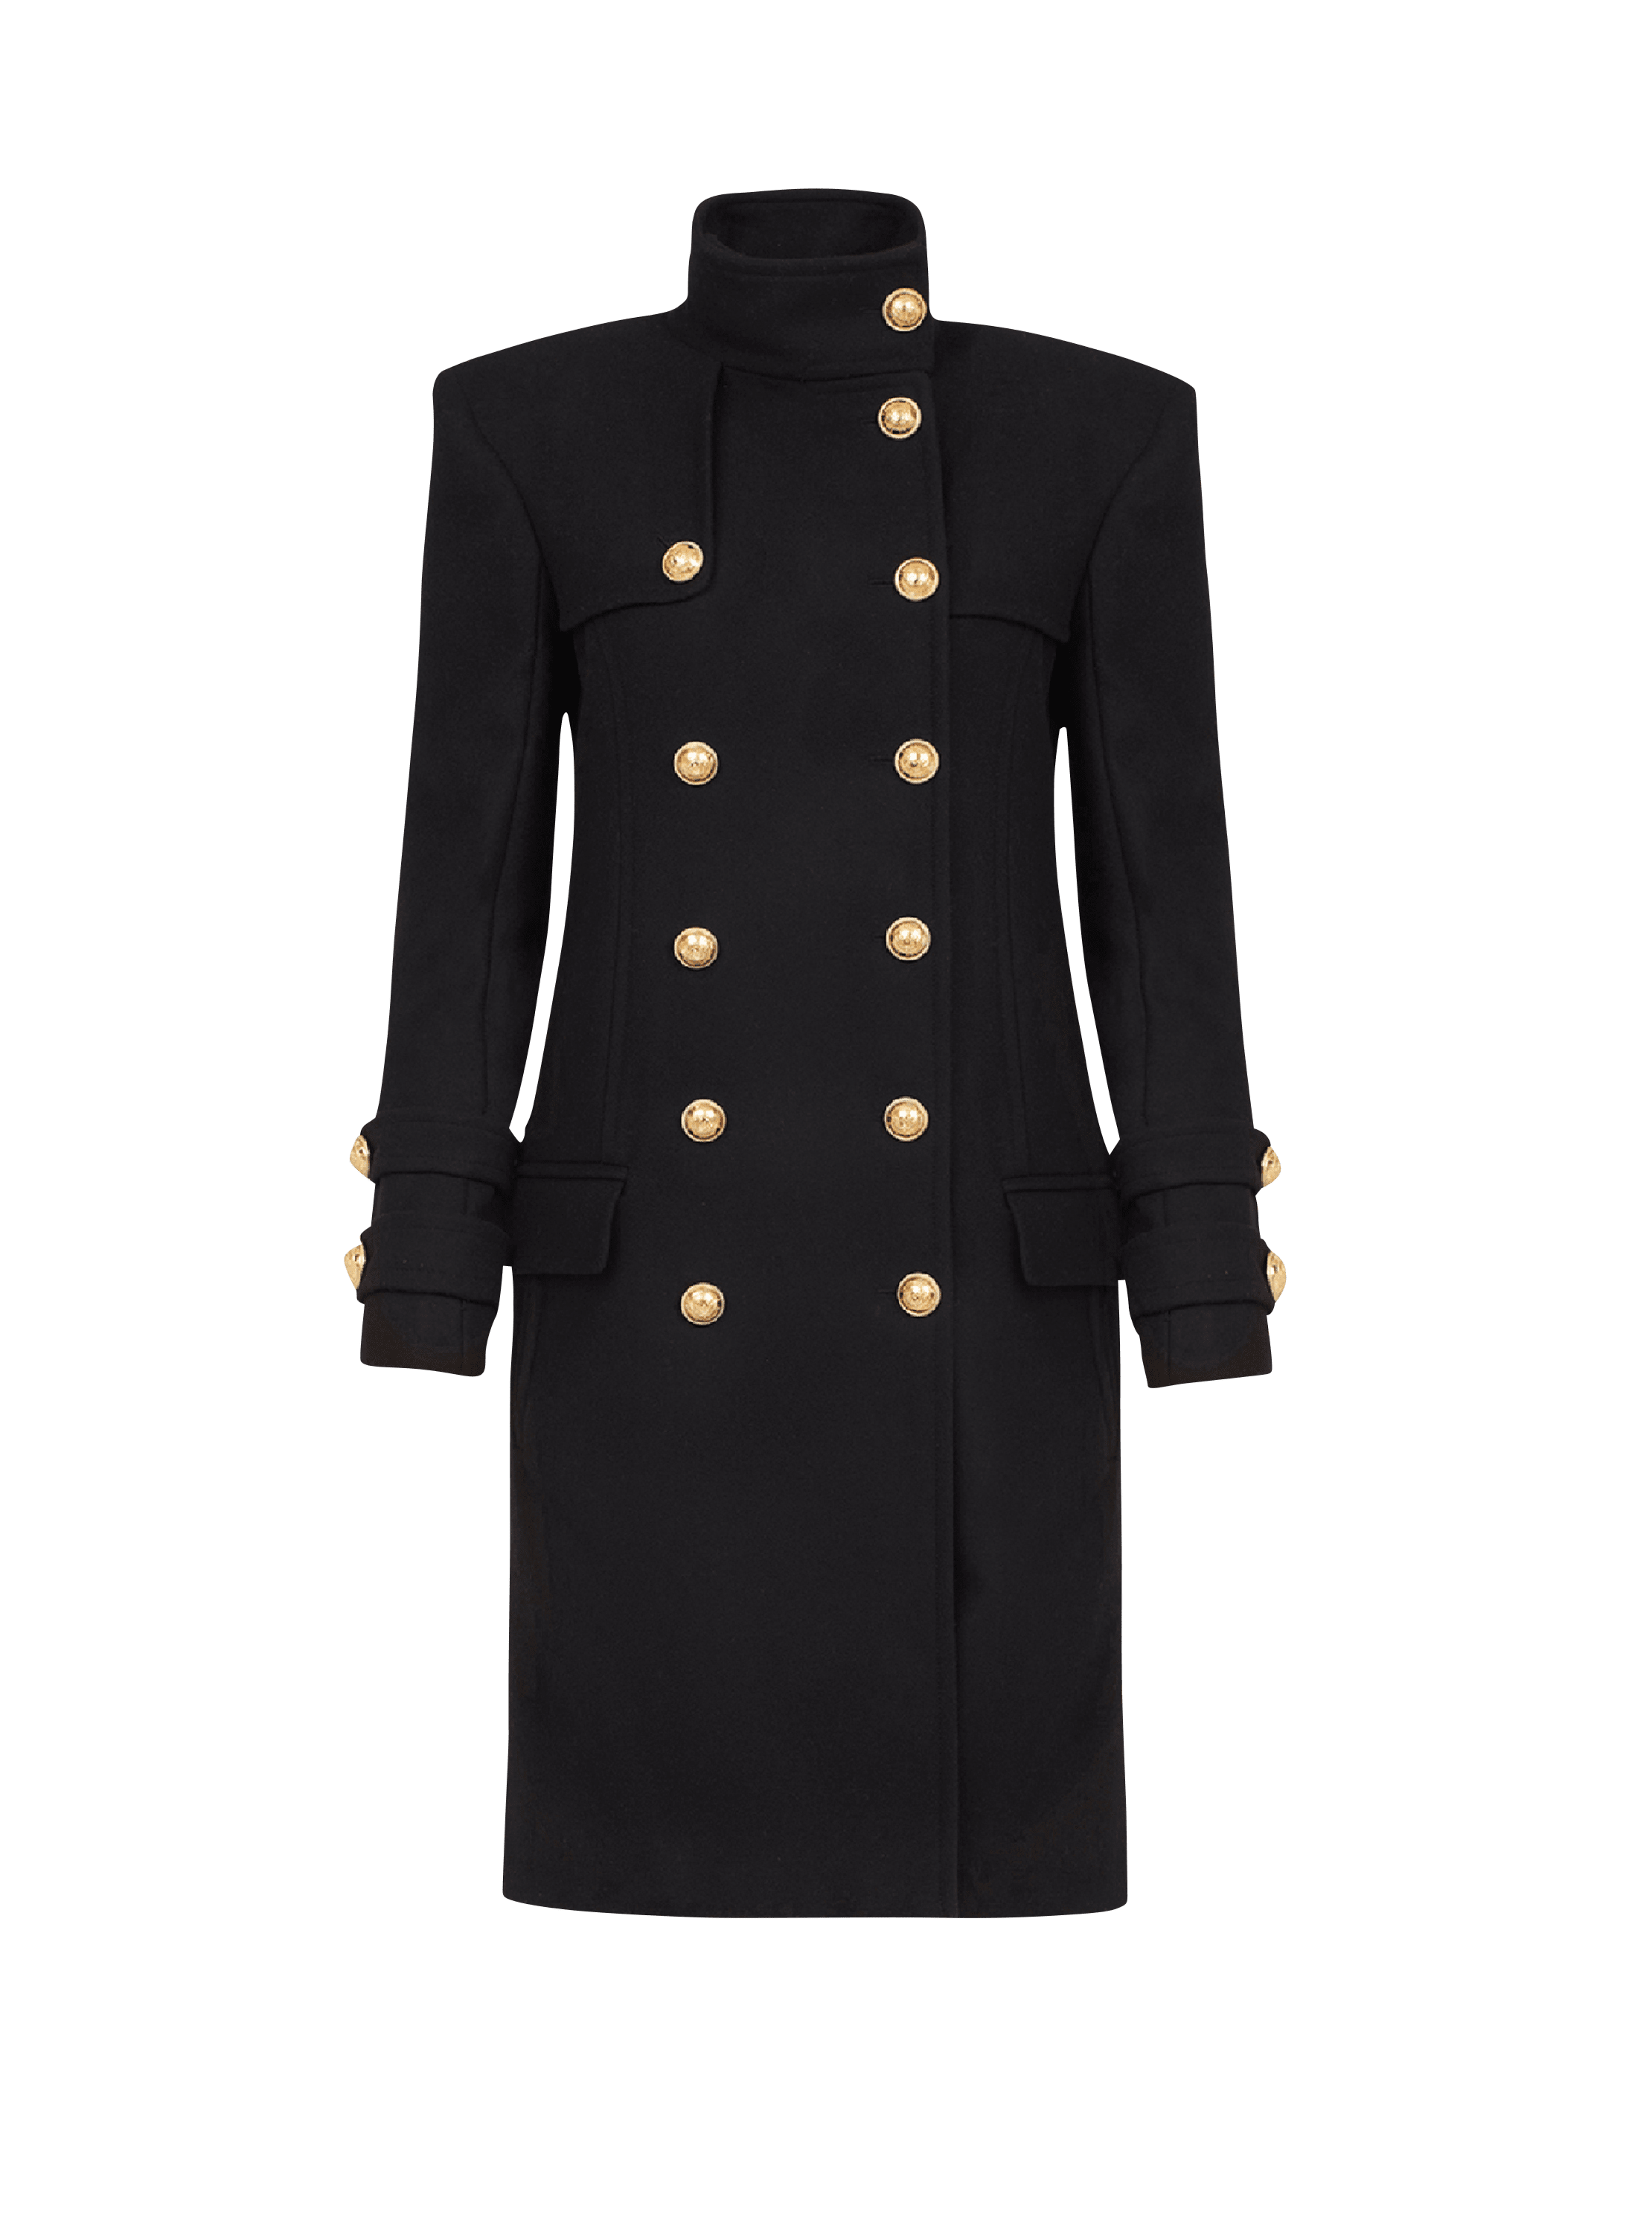 Abrigo largo de lana y cachemira con doble botonadura dorada